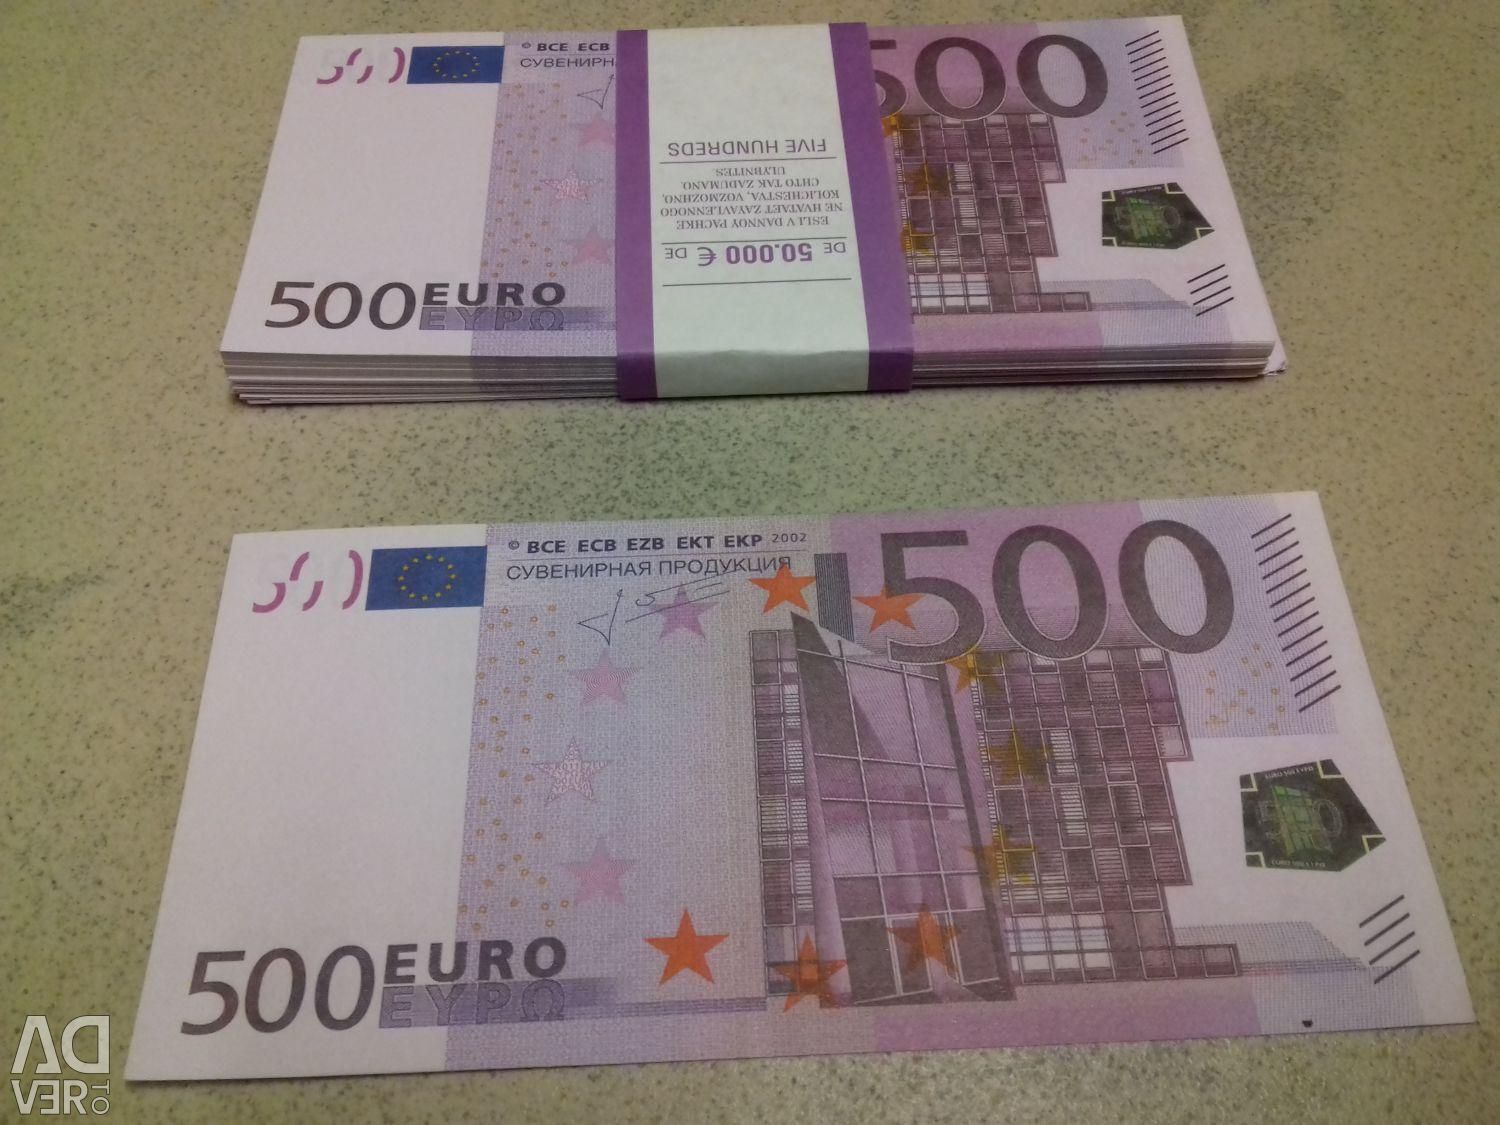 500 евро в рублях на сегодня сколько. Пачка купюр 500 евро. 500 Евро банка приколов. 500 Евро в рублях. 500 Евро купюра сувенирная продукция.